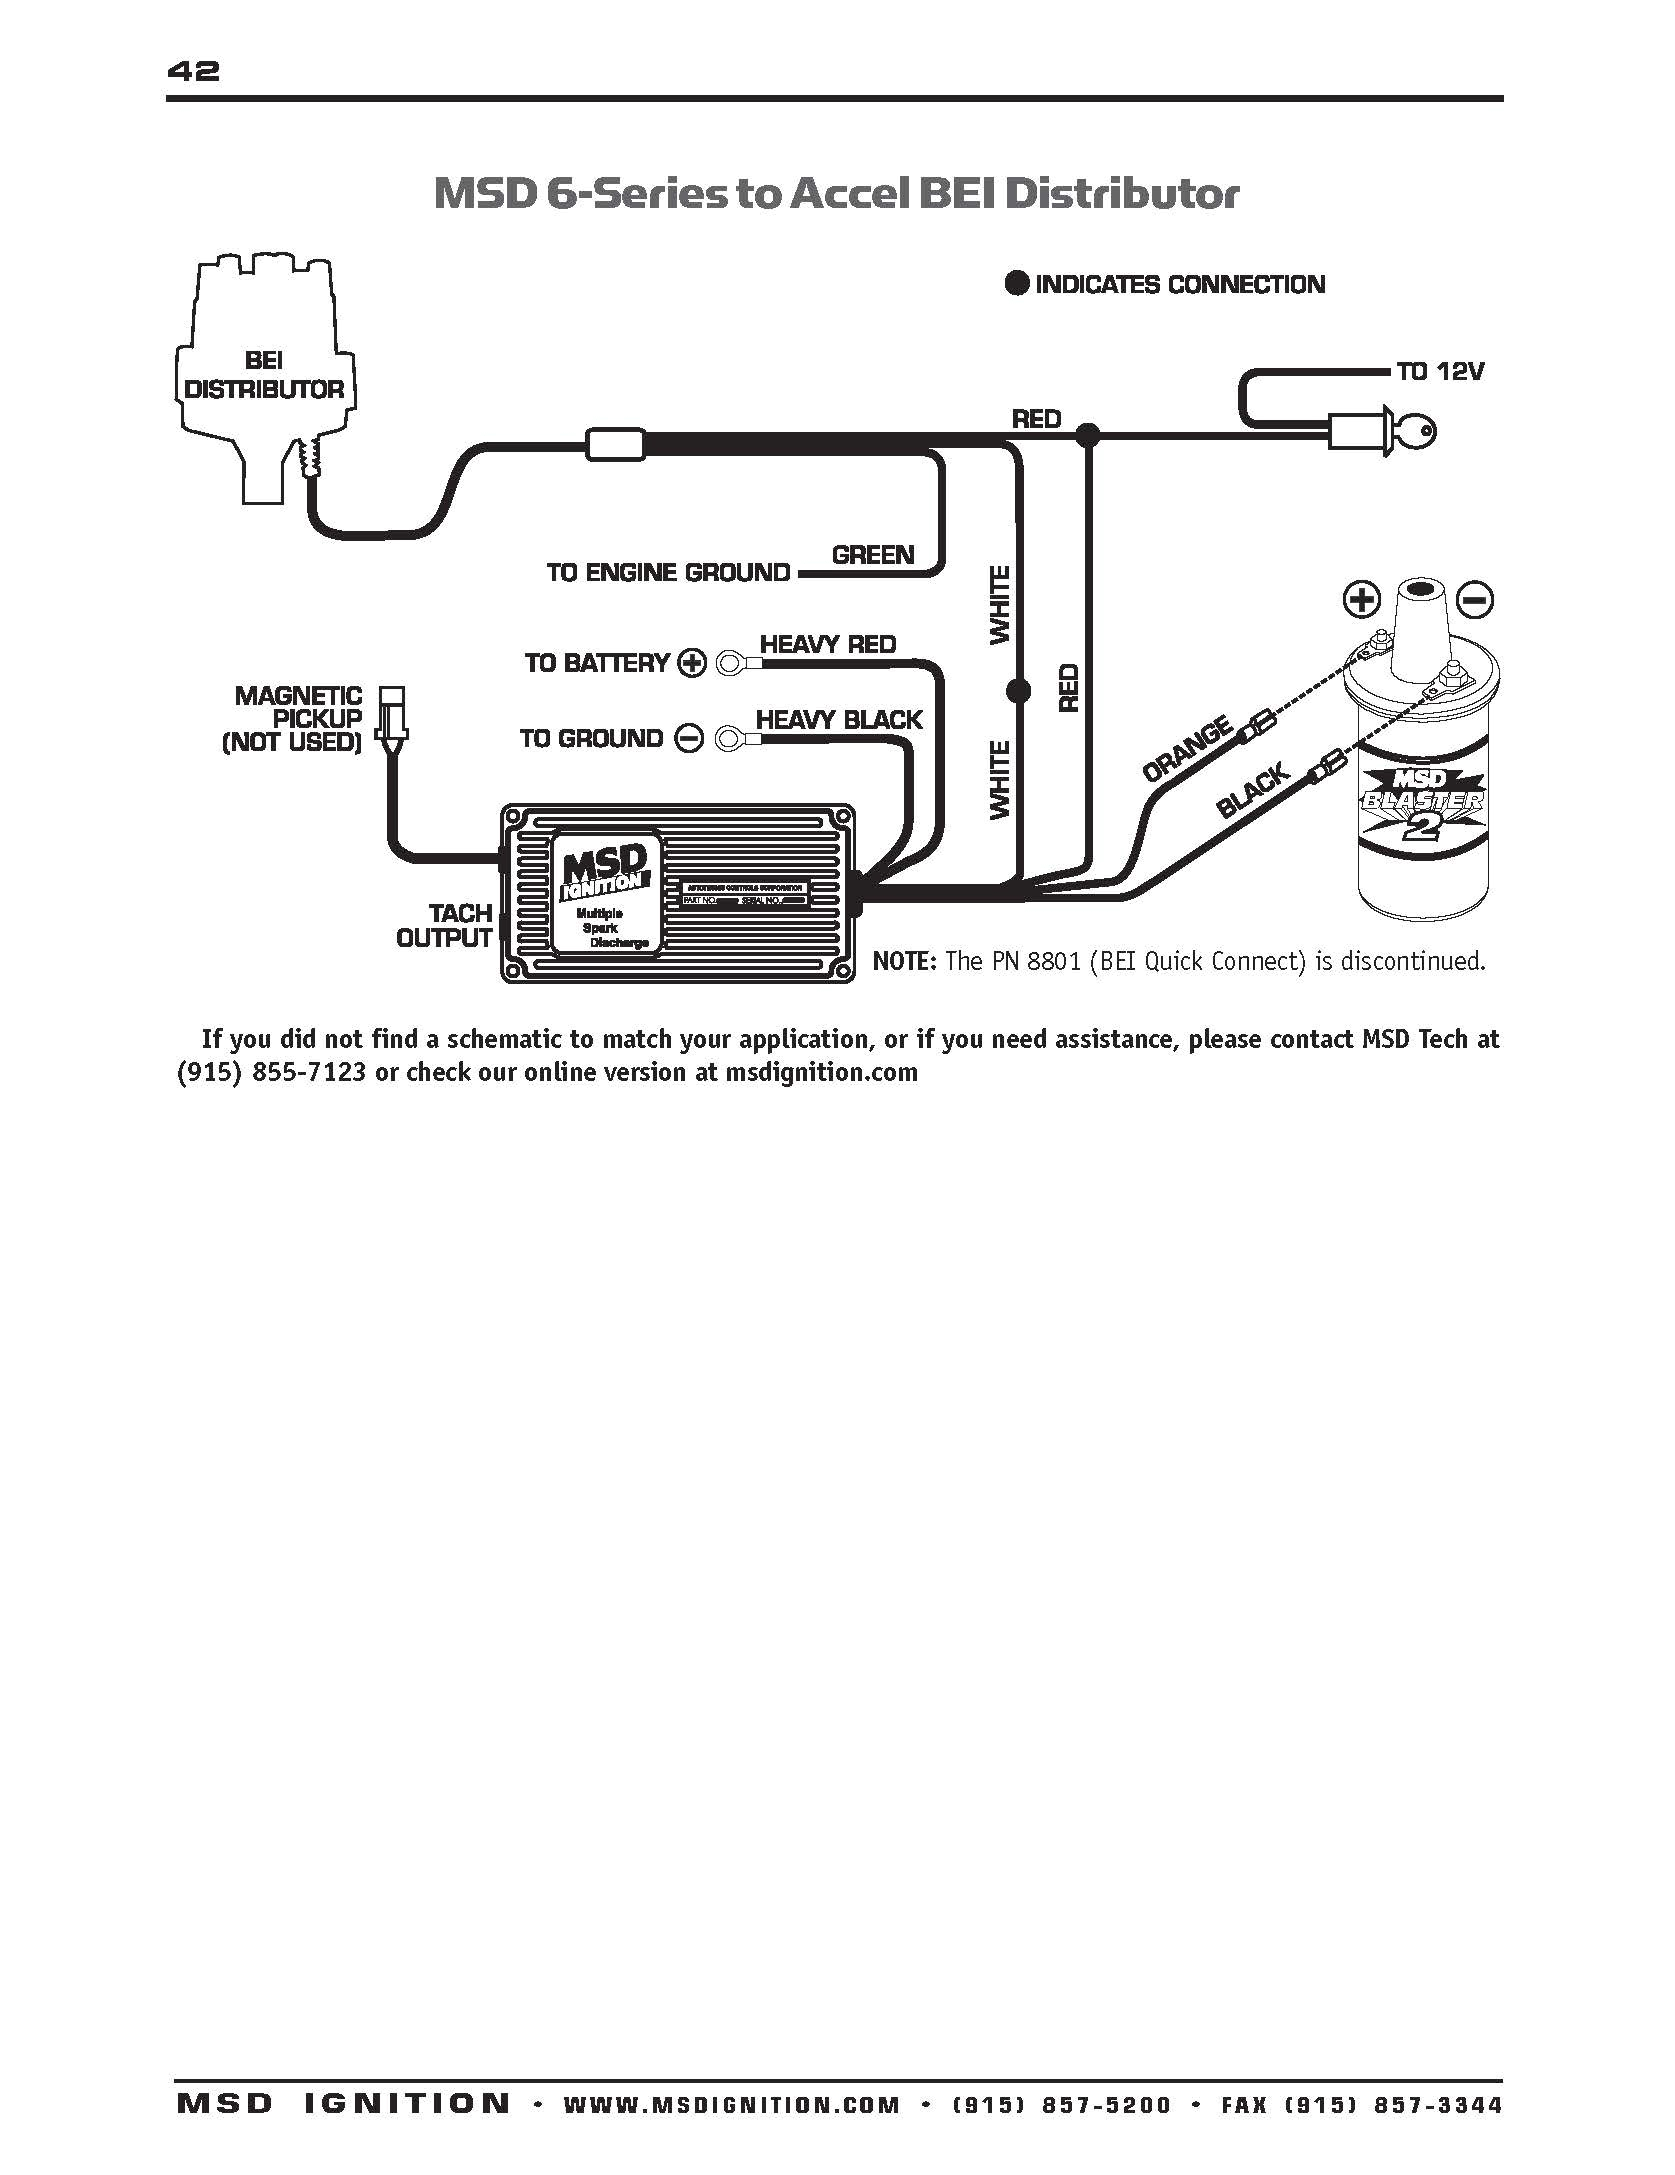 mallory distributor wiring wiring diagram database wiring diagram distributor hyfire mallory ignition mallory mag wiring